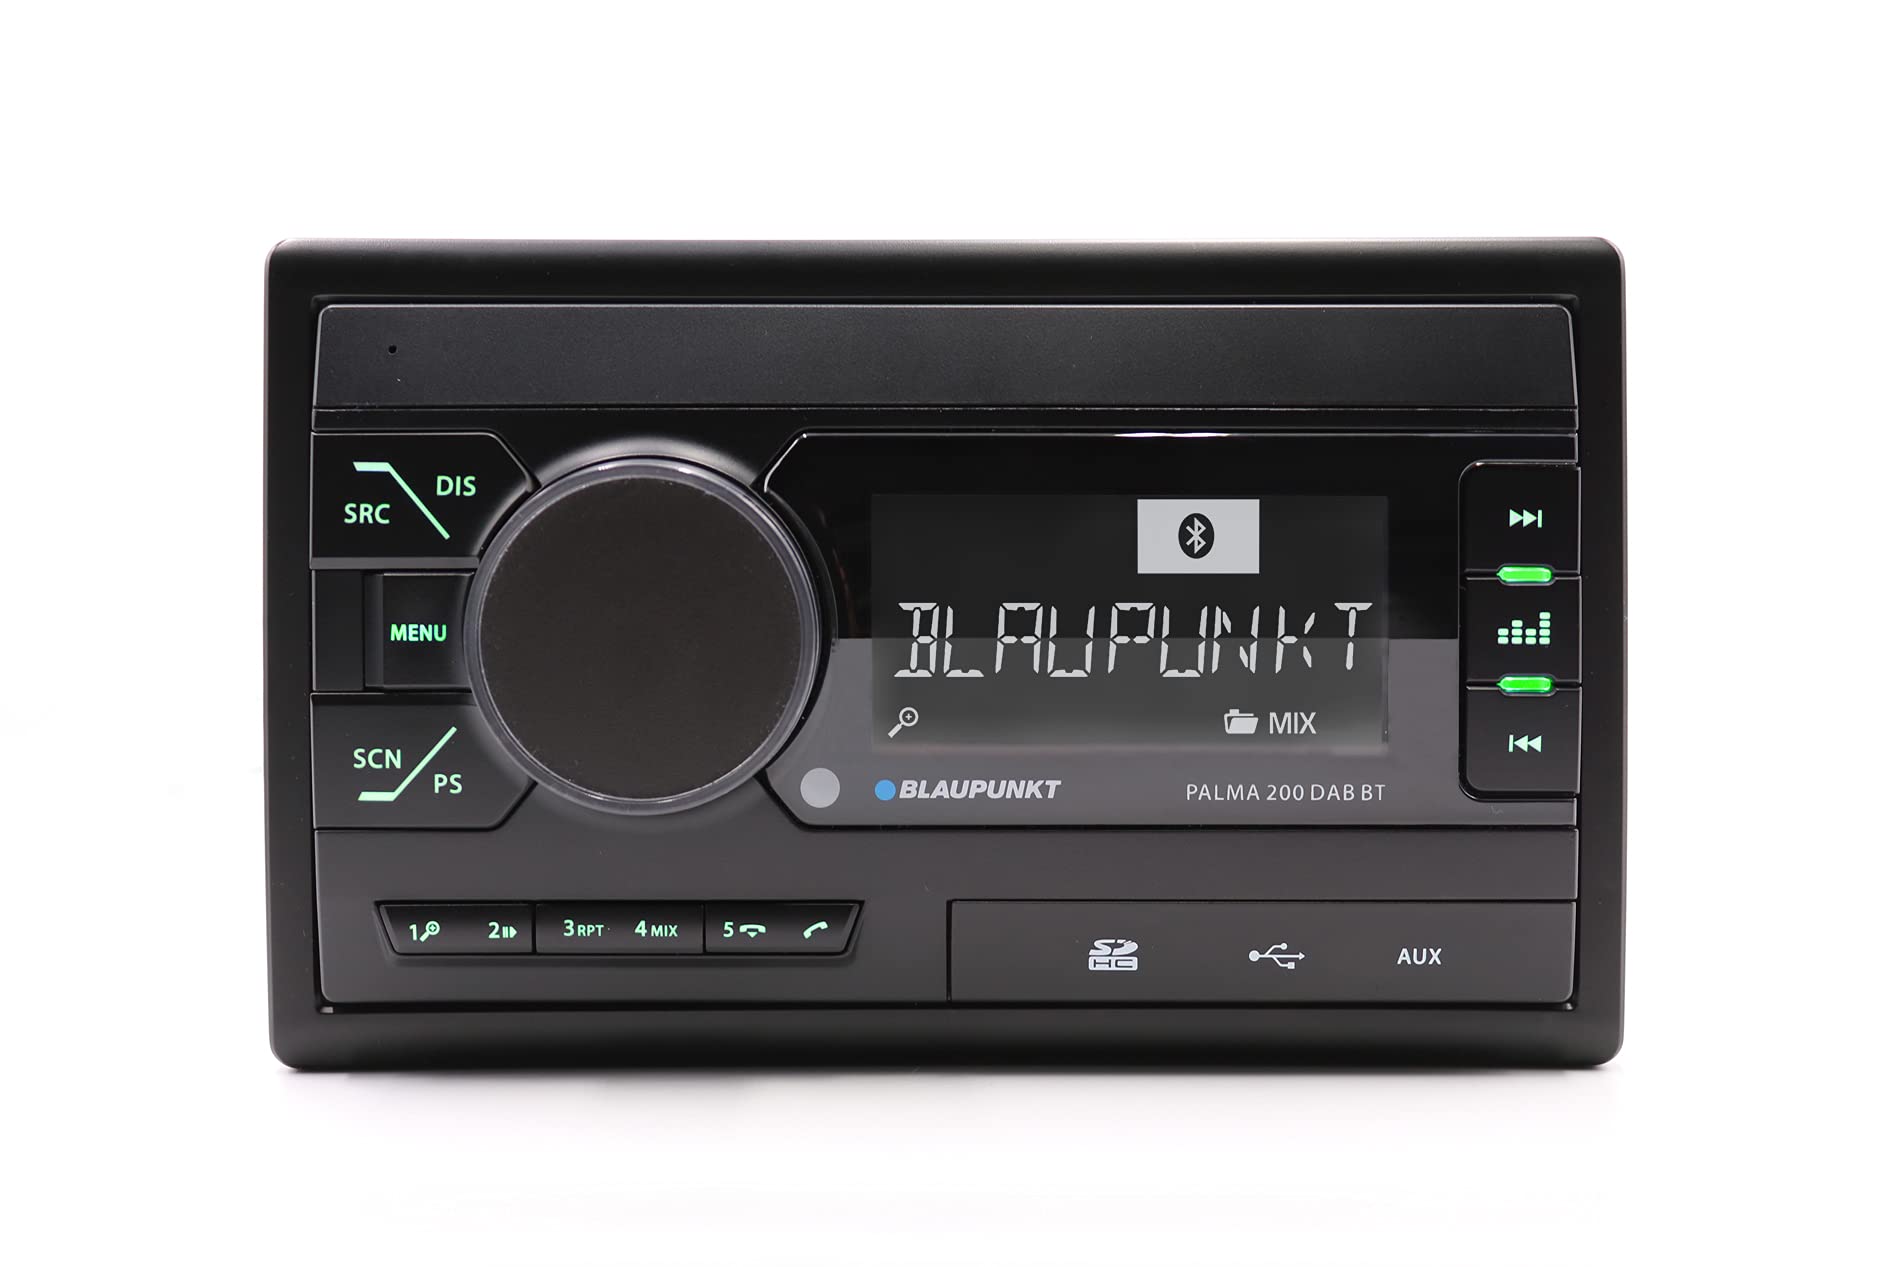 Blaupunkt Palma 200 DAB BT, 2-DIN Autoradio, DAB+, Bluetooth, Freisprecheinrichtung, USB, SD-Kartenleser, Aux-Eingang, 160 Watt